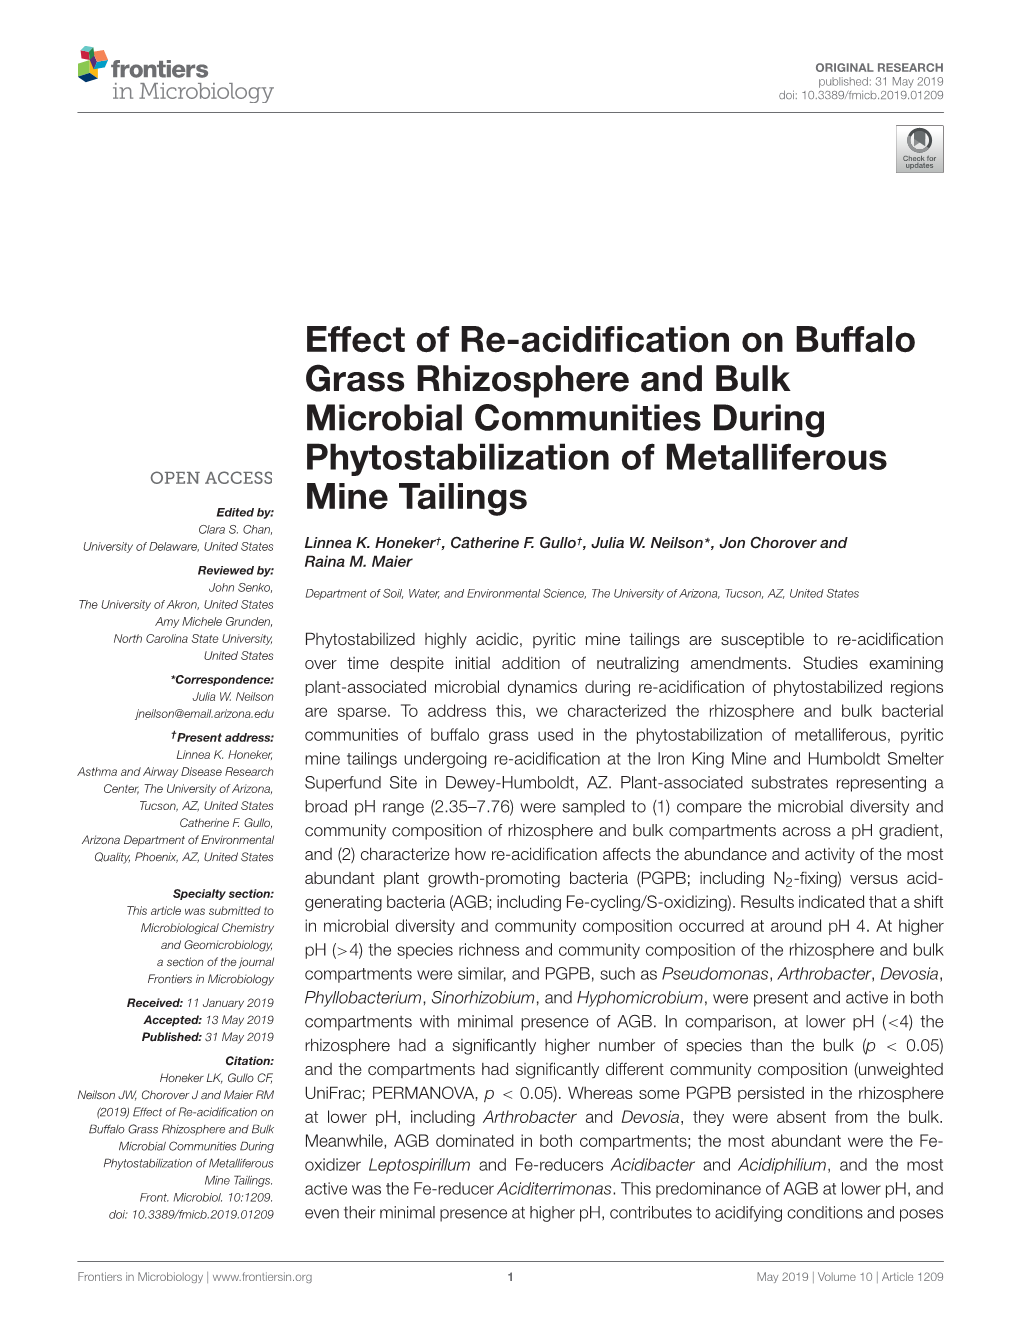 Effect of Re-Acidification on Buffalo Grass Rhizosphere and Bulk